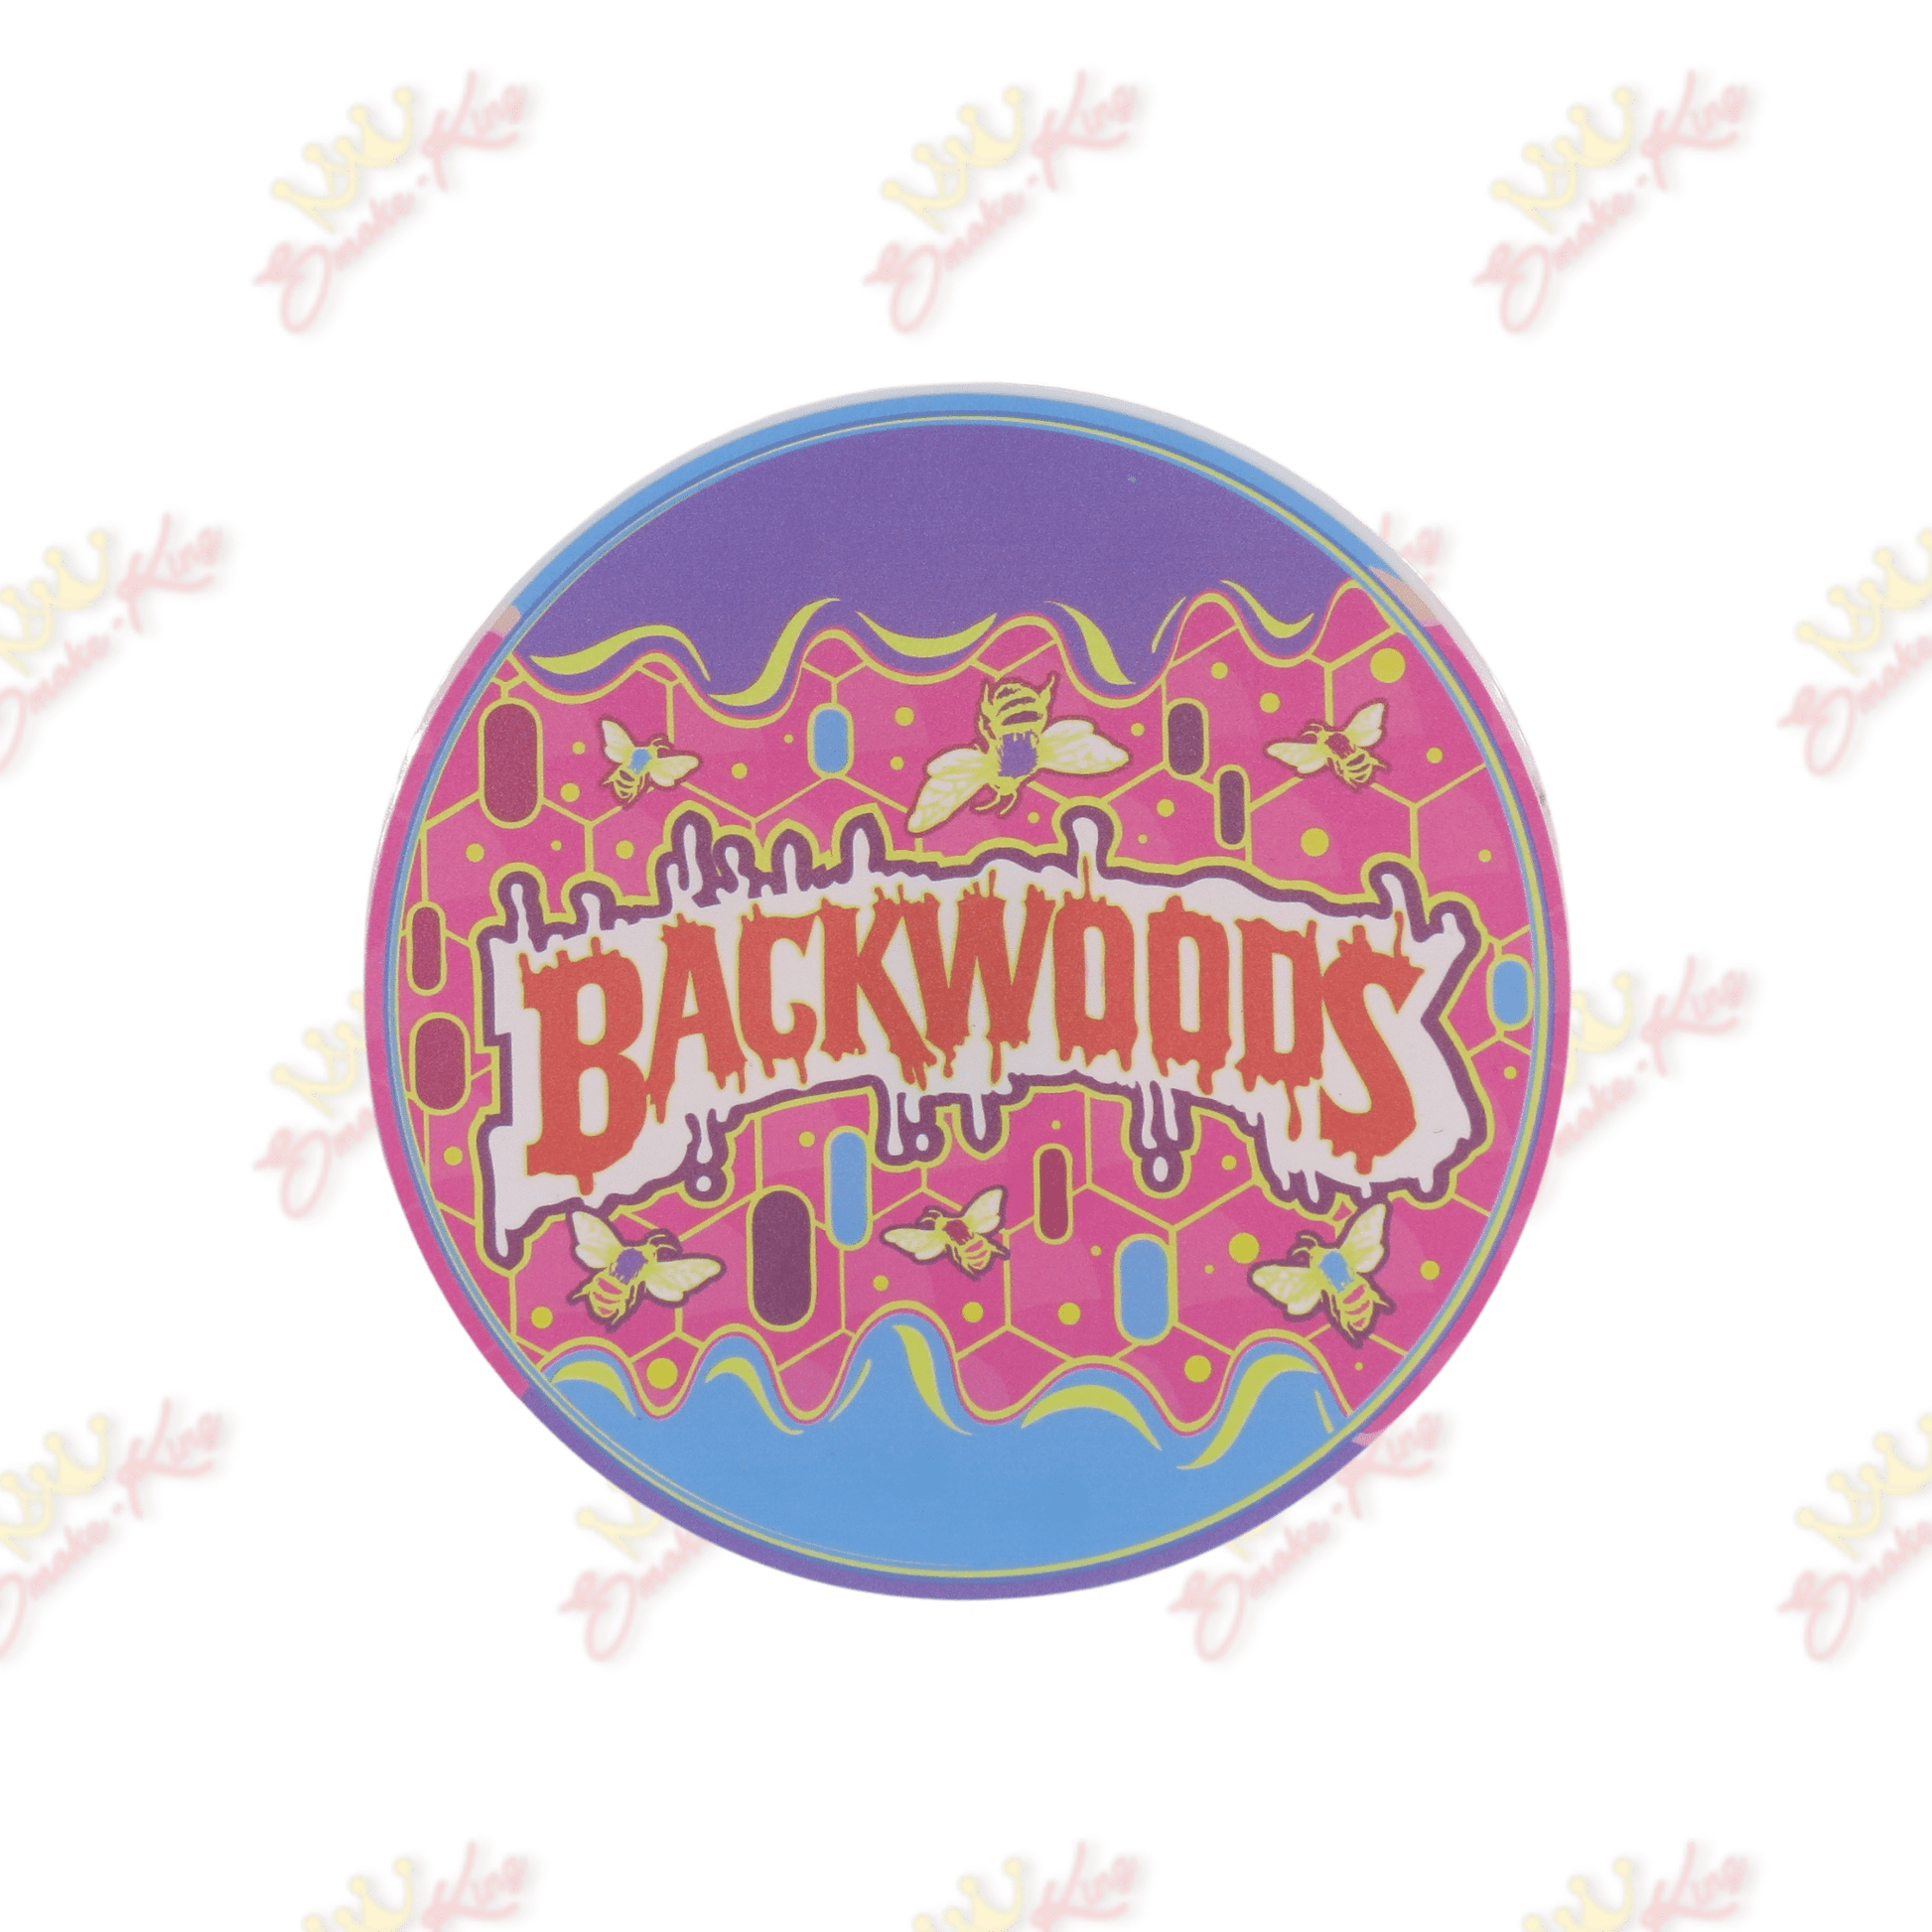 Backwoods dab pads Pink Backwoods LED Coaster Dab Pad